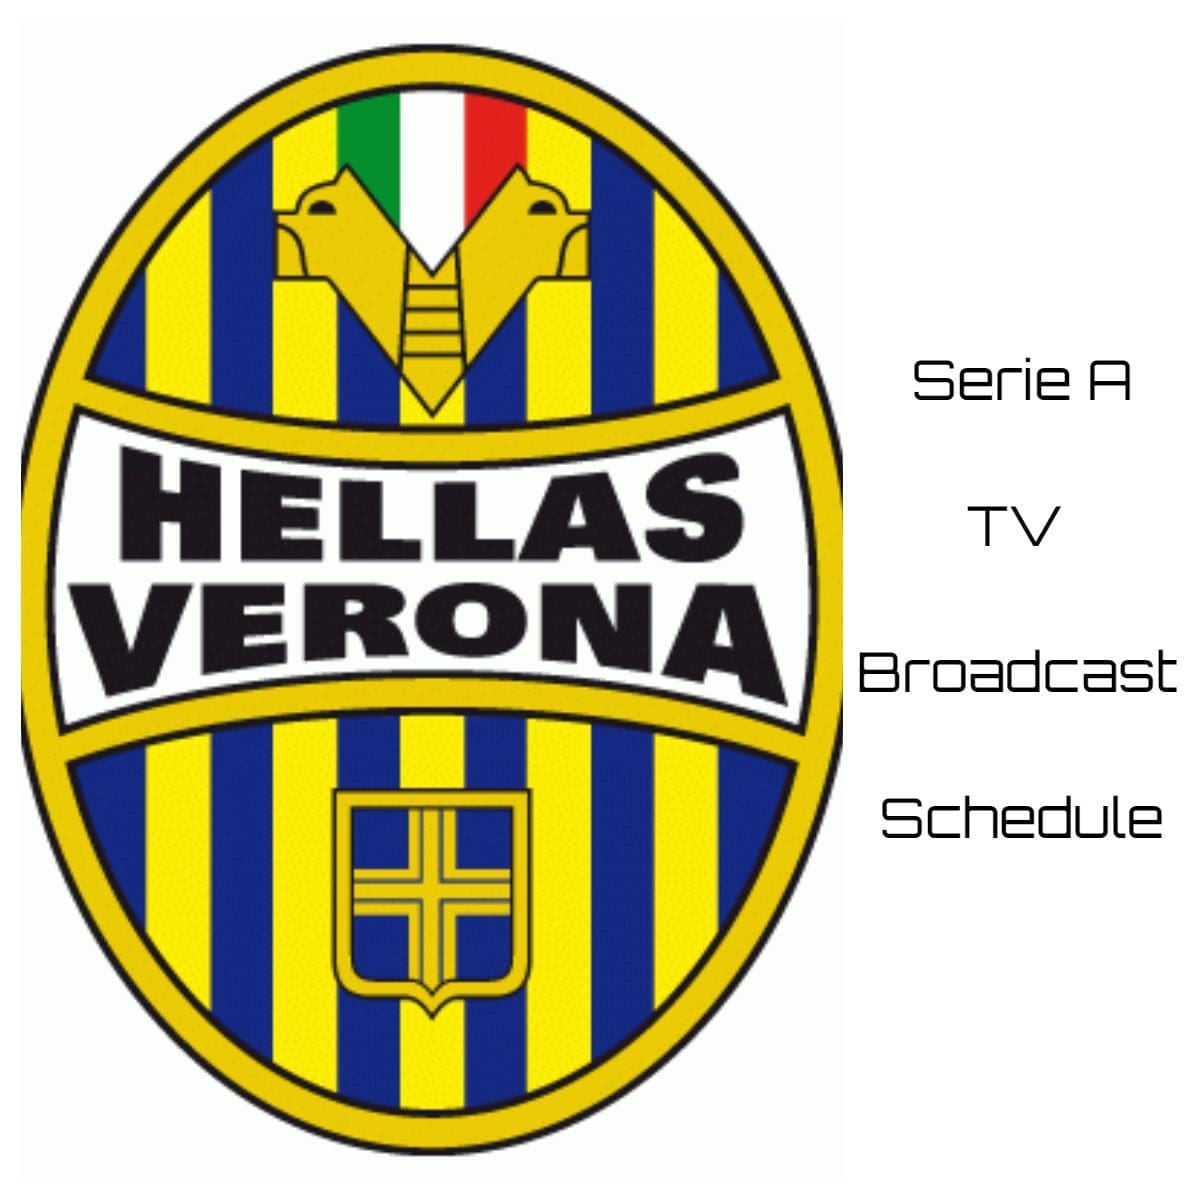 Hellas Verona TV Broadcast Schedule